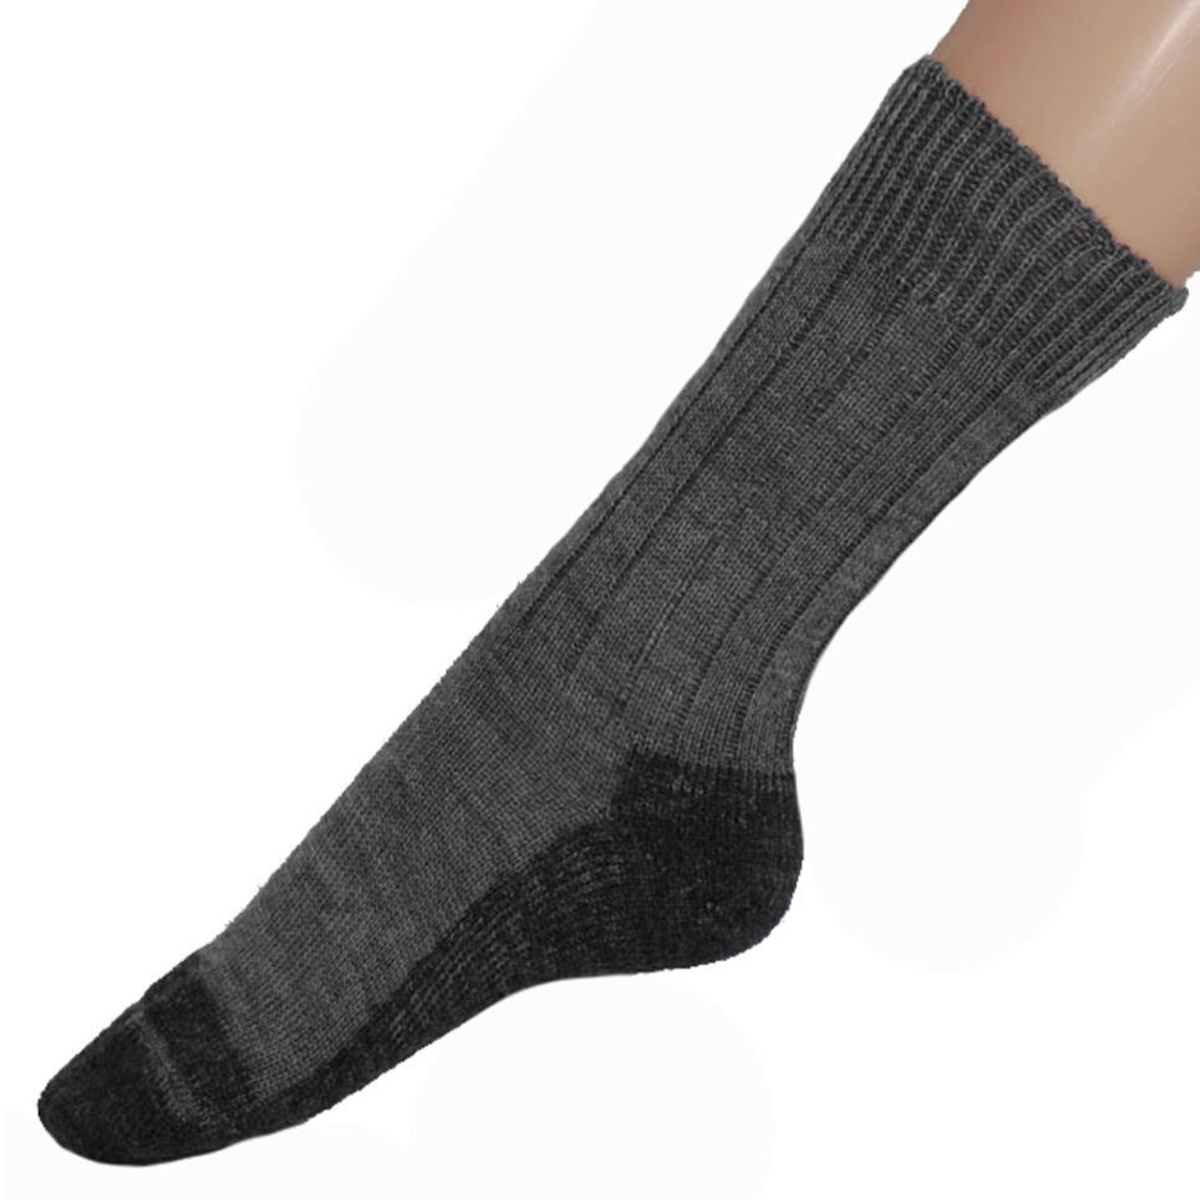 Ruskovilla's adult's merino wool Trekking socks